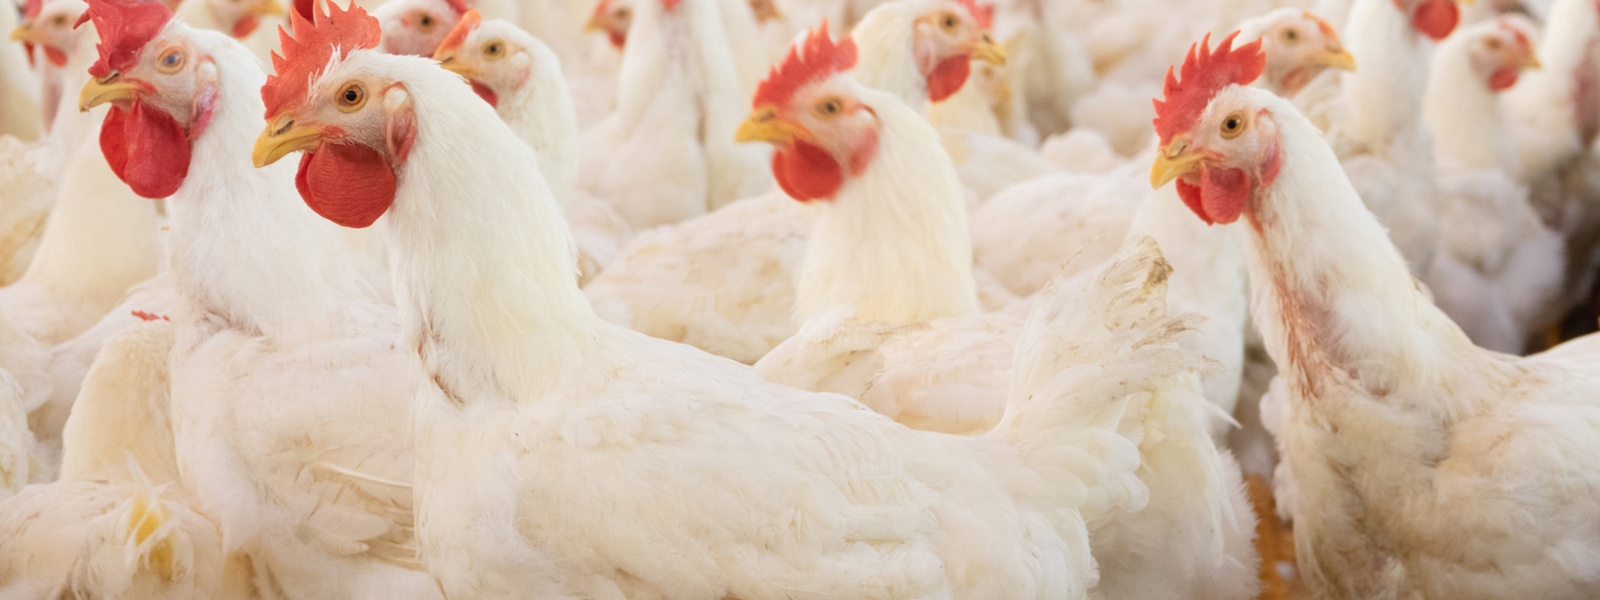 Farm flock losses climb as avian flu outbreak spreads